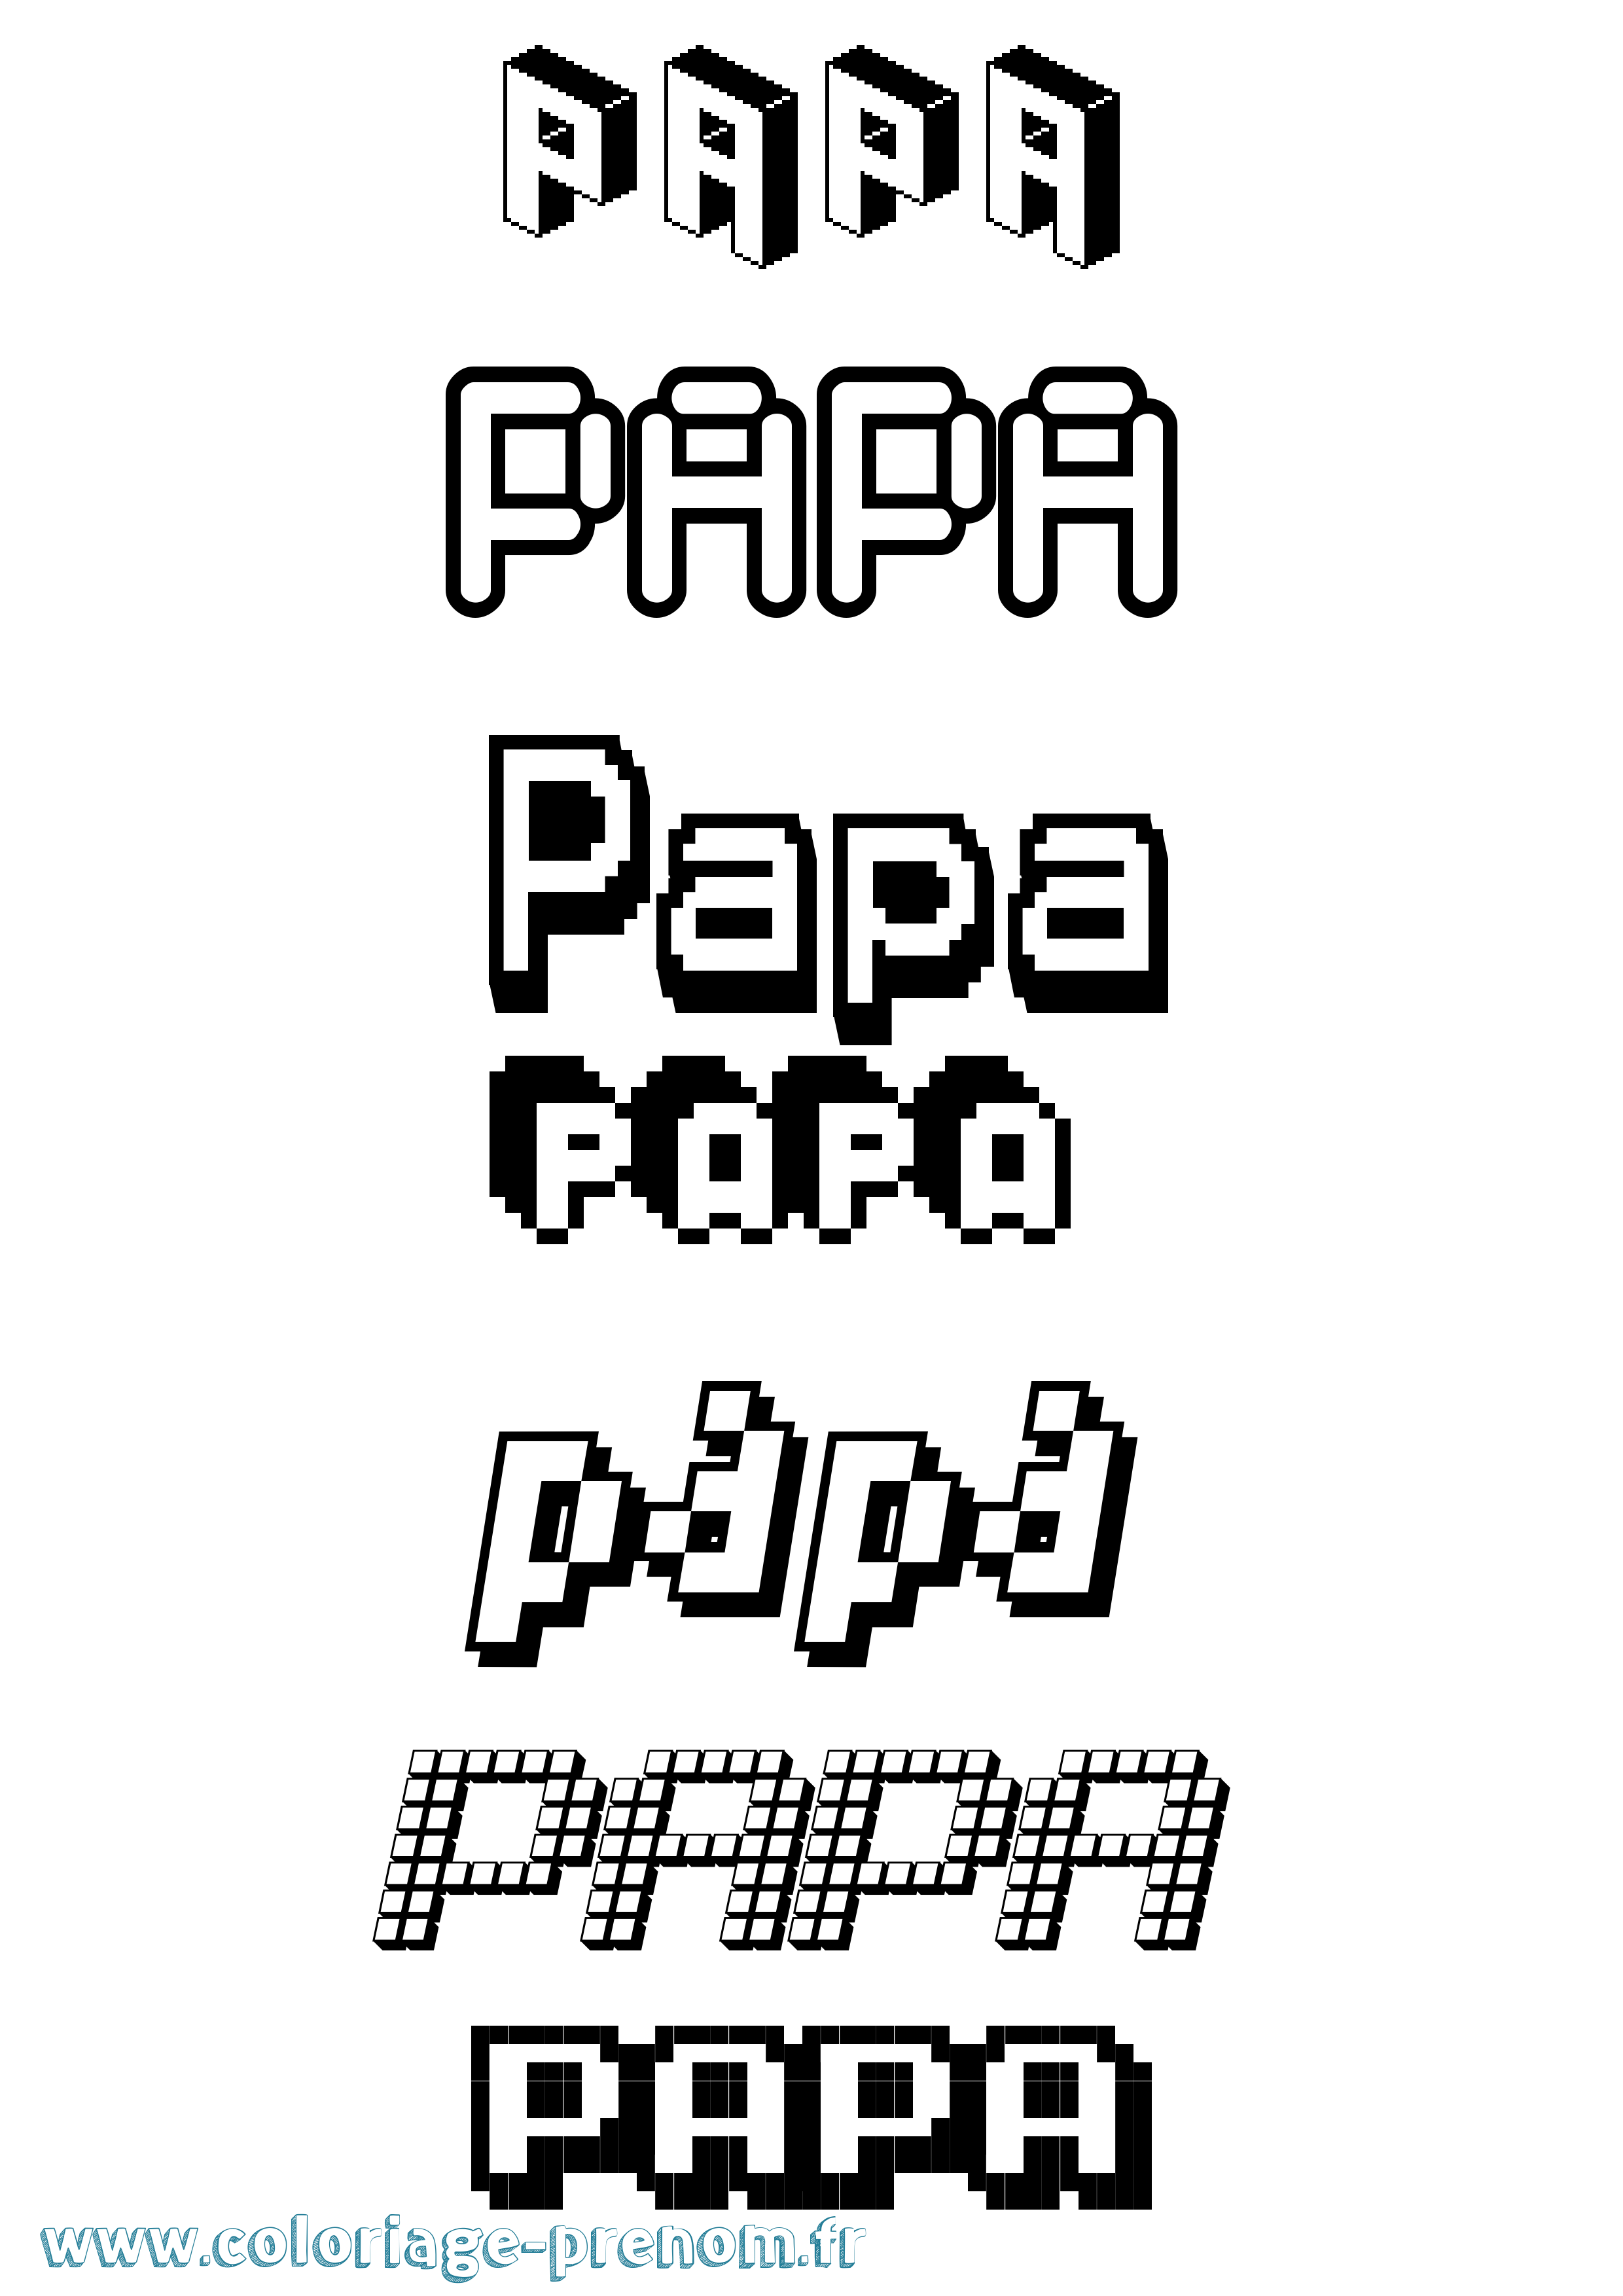 Coloriage prénom Papa Pixel